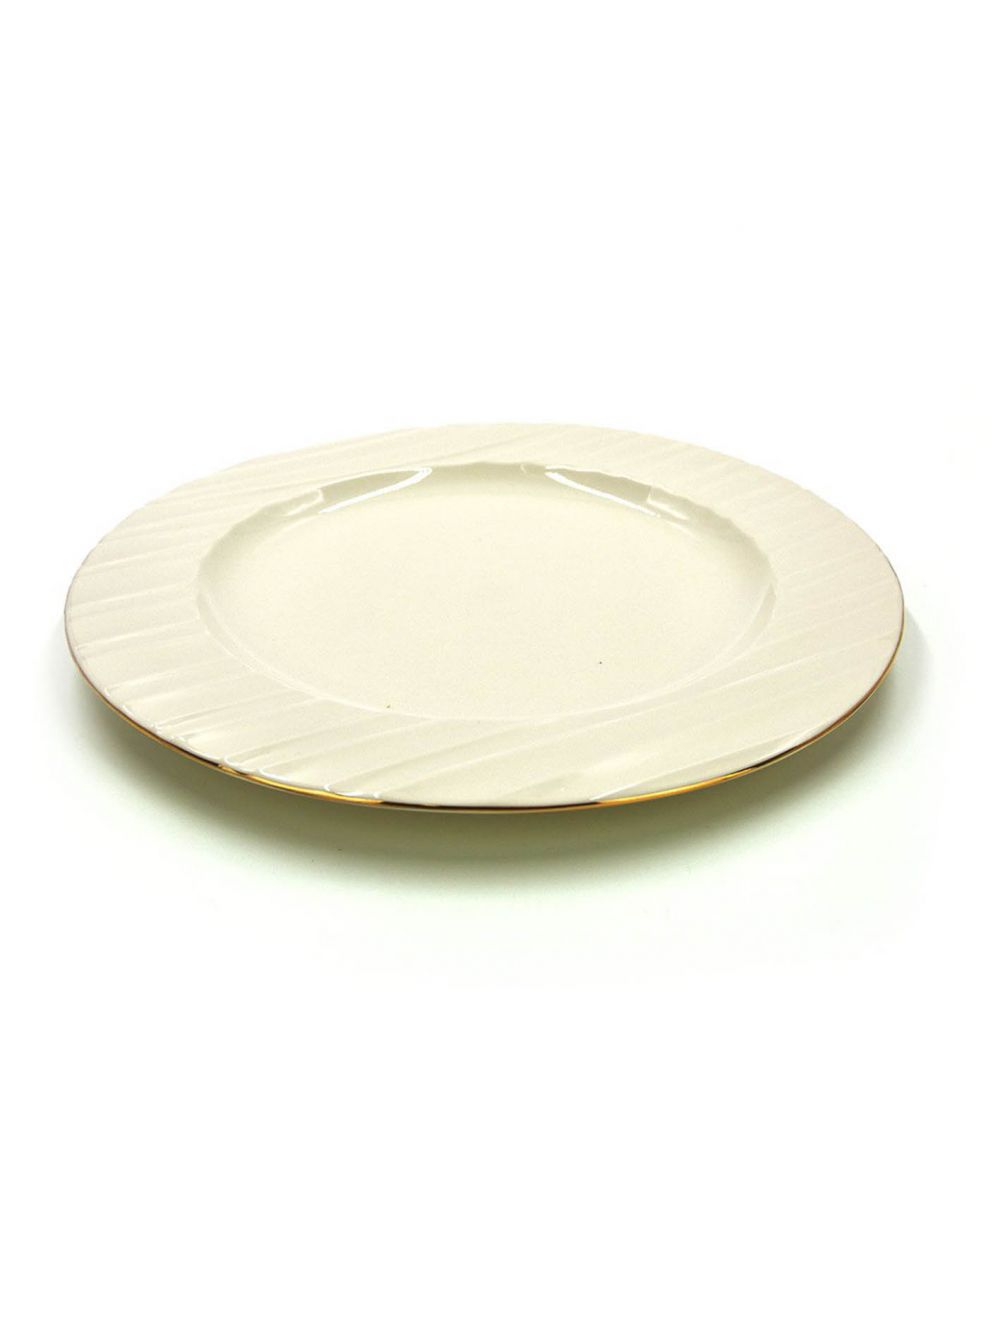 Qualitier Dessert Plate 21 cm Gold/White